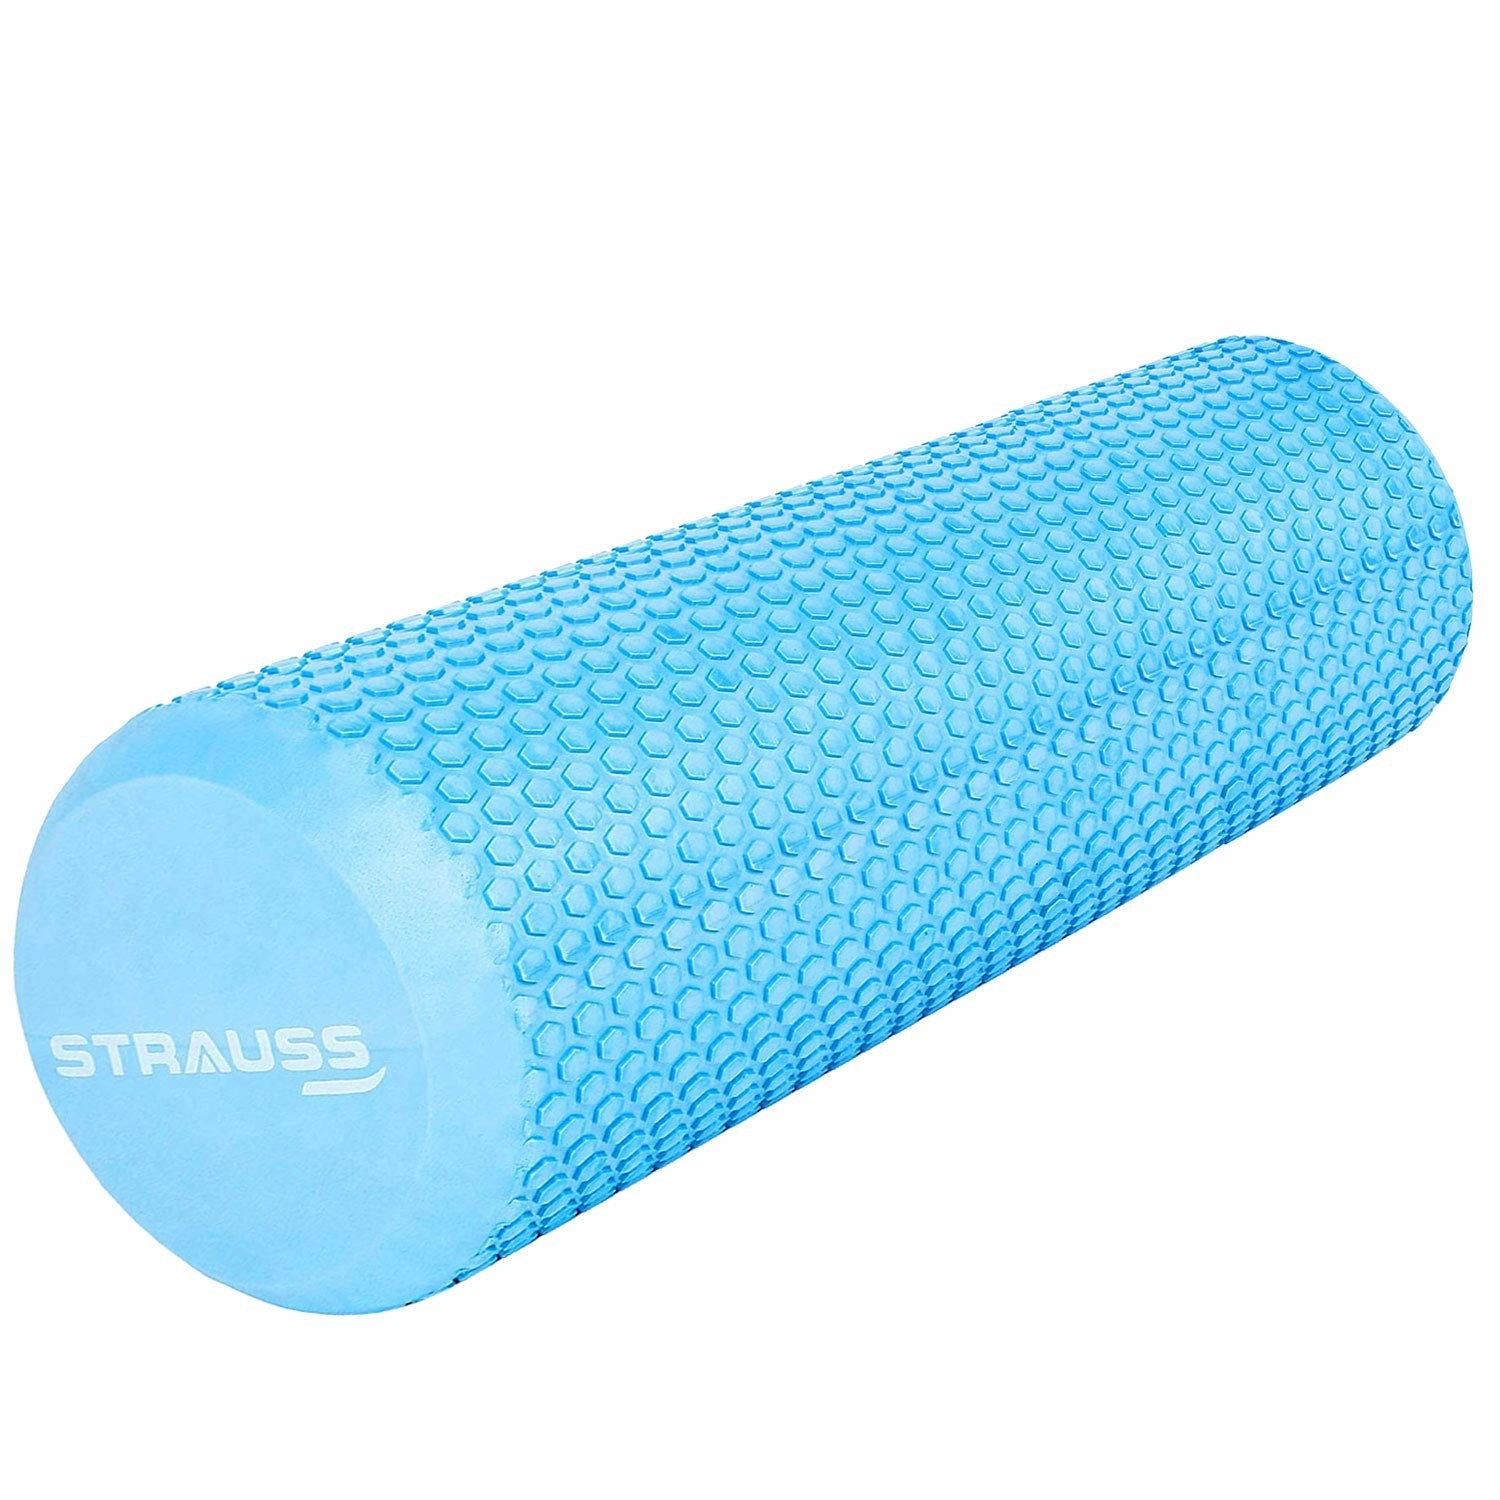 A blue foam roller